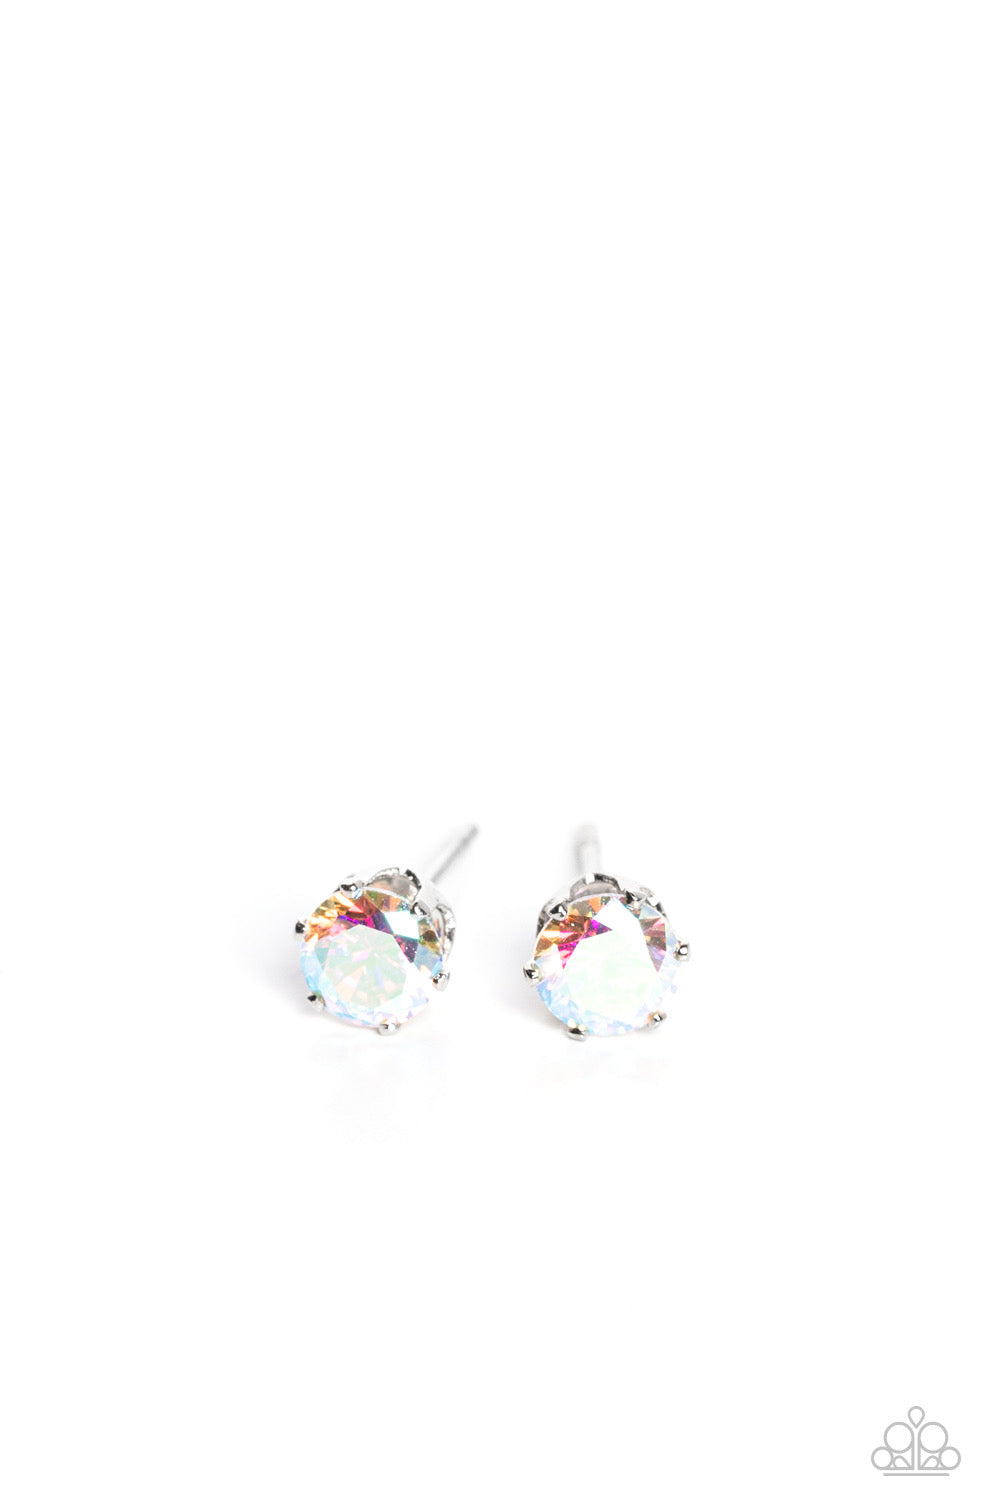  Womens Stud Earrings - Delicately Dainty - Iridescent Earrings Paparazzi jewelry image